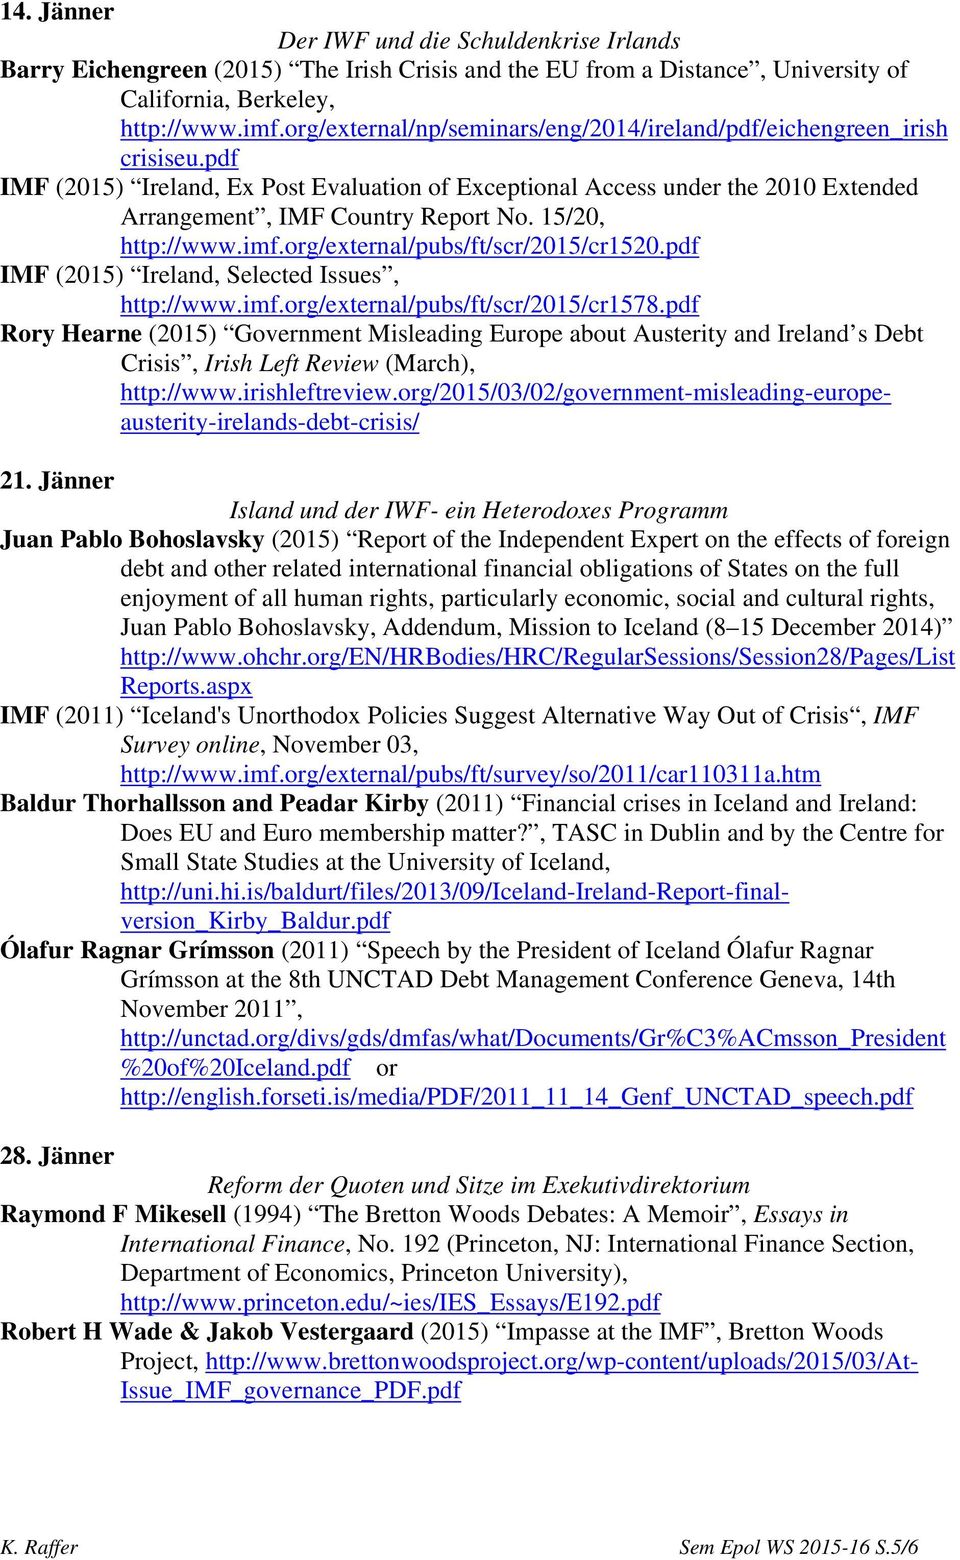 15/20, http://www.imf.org/external/pubs/ft/scr/2015/cr1520.pdf IMF (2015) Ireland, Selected Issues, http://www.imf.org/external/pubs/ft/scr/2015/cr1578.